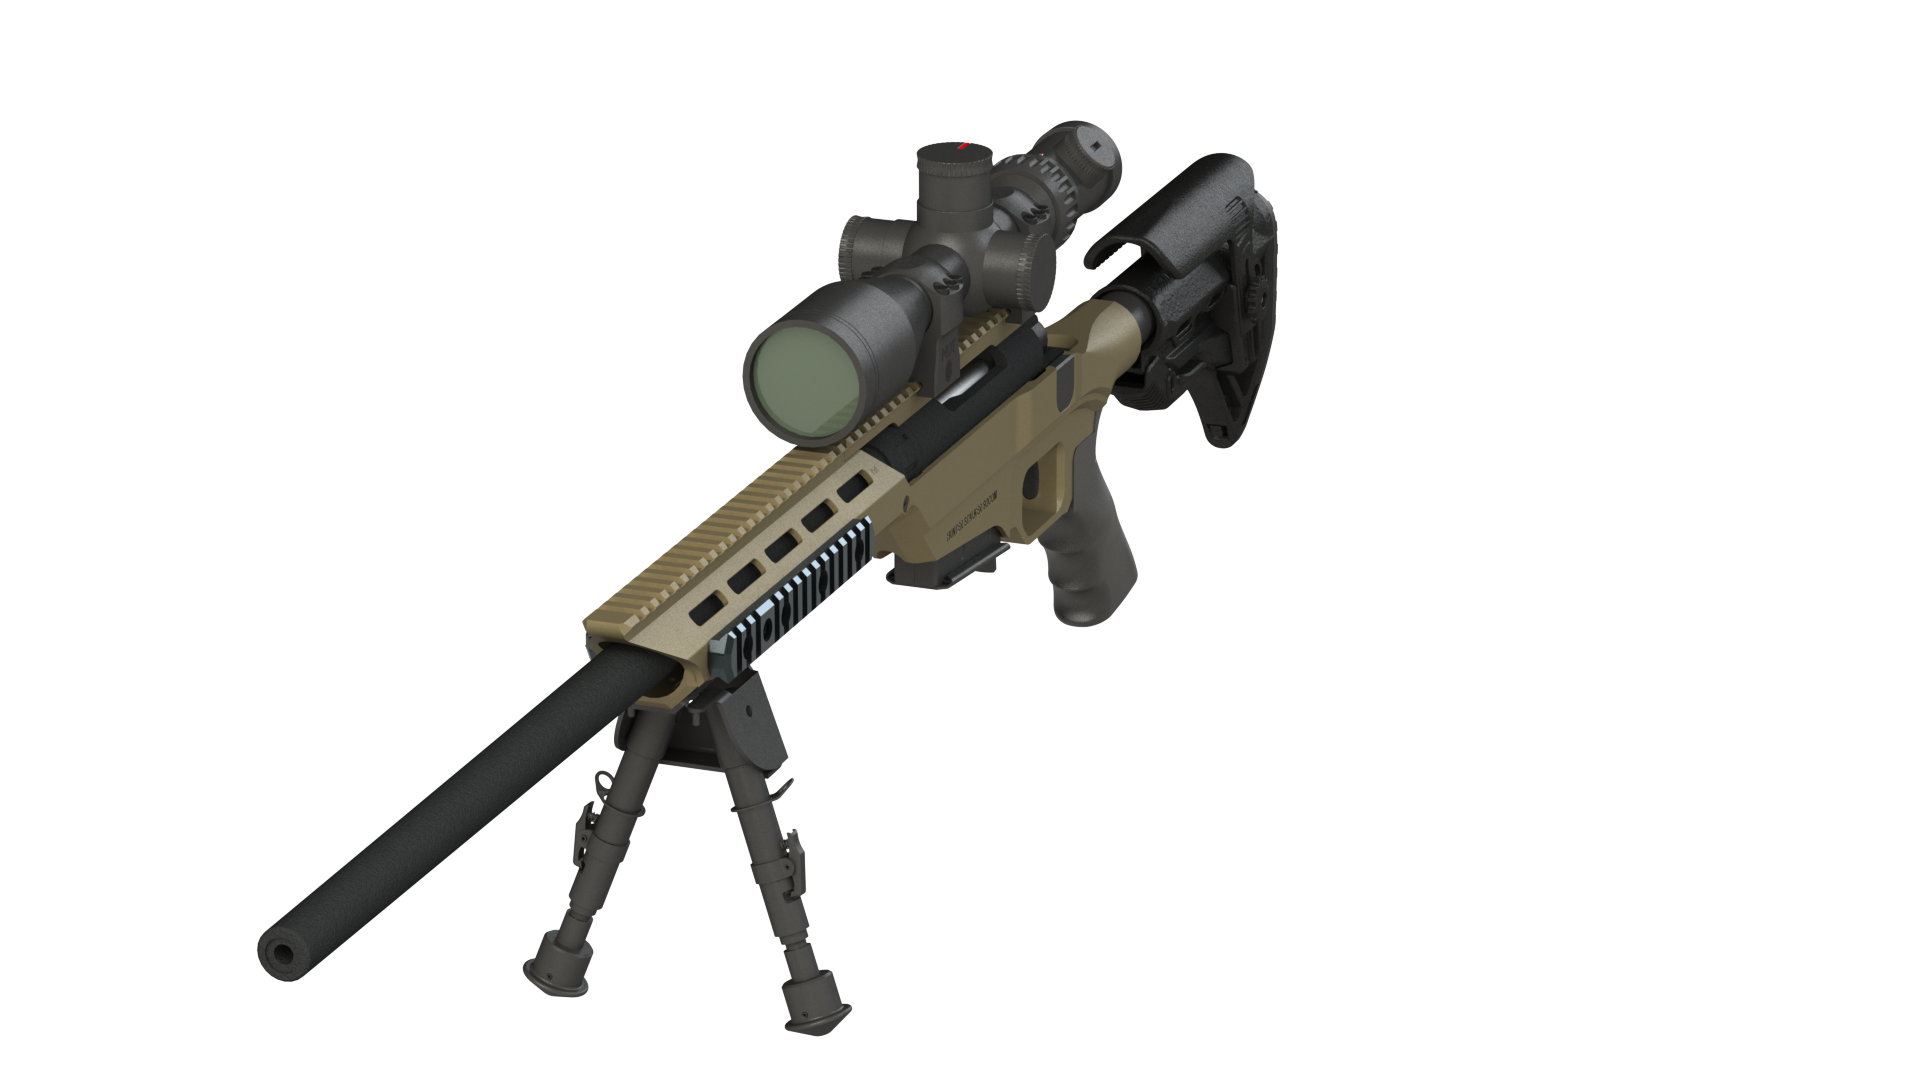 Rifle sniper